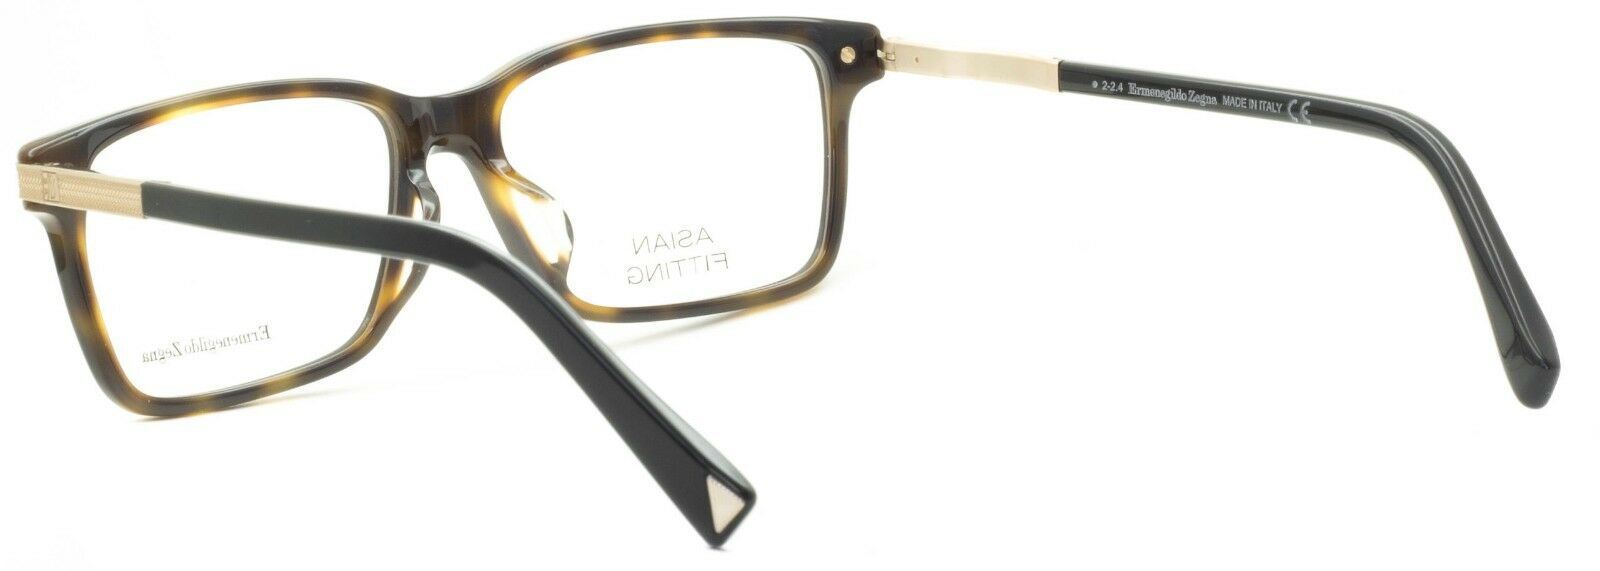 ERMENEGILDO ZEGNA EZ 5009-F 005 RX Optical FRAMES NEW Glasses Eyewear Eyeglasses